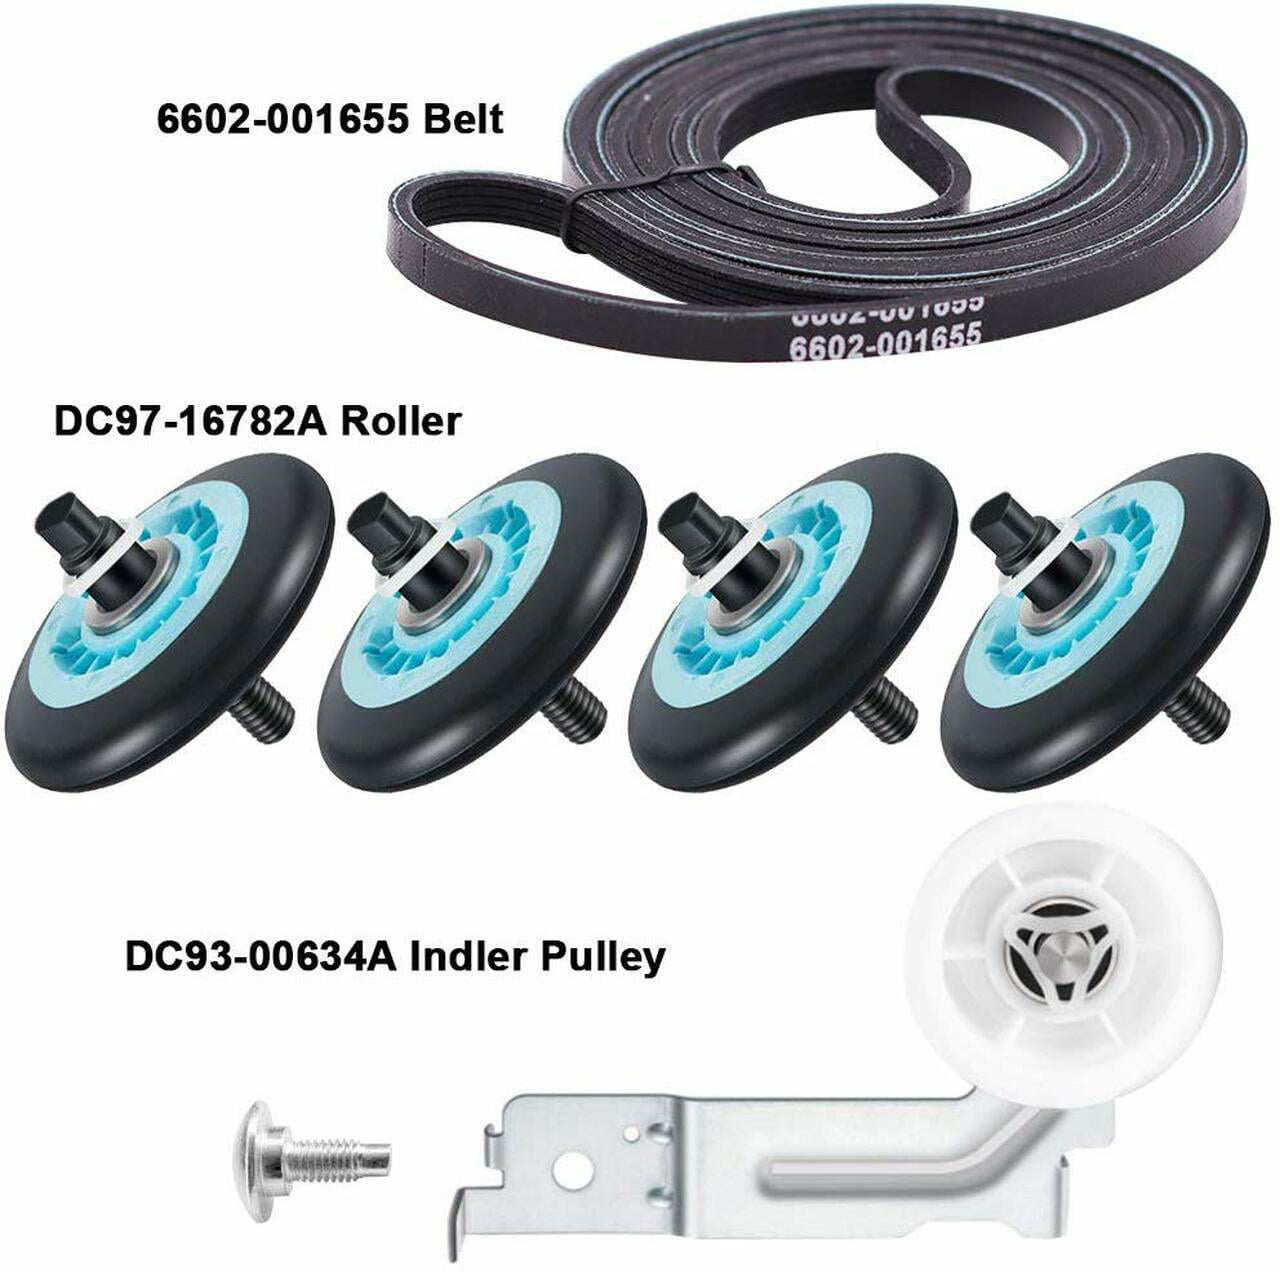 Details about   DC97-16782A DC97-07523B DC93-00634A 6602-001655 Samsung Belt Roller Idler Kit 